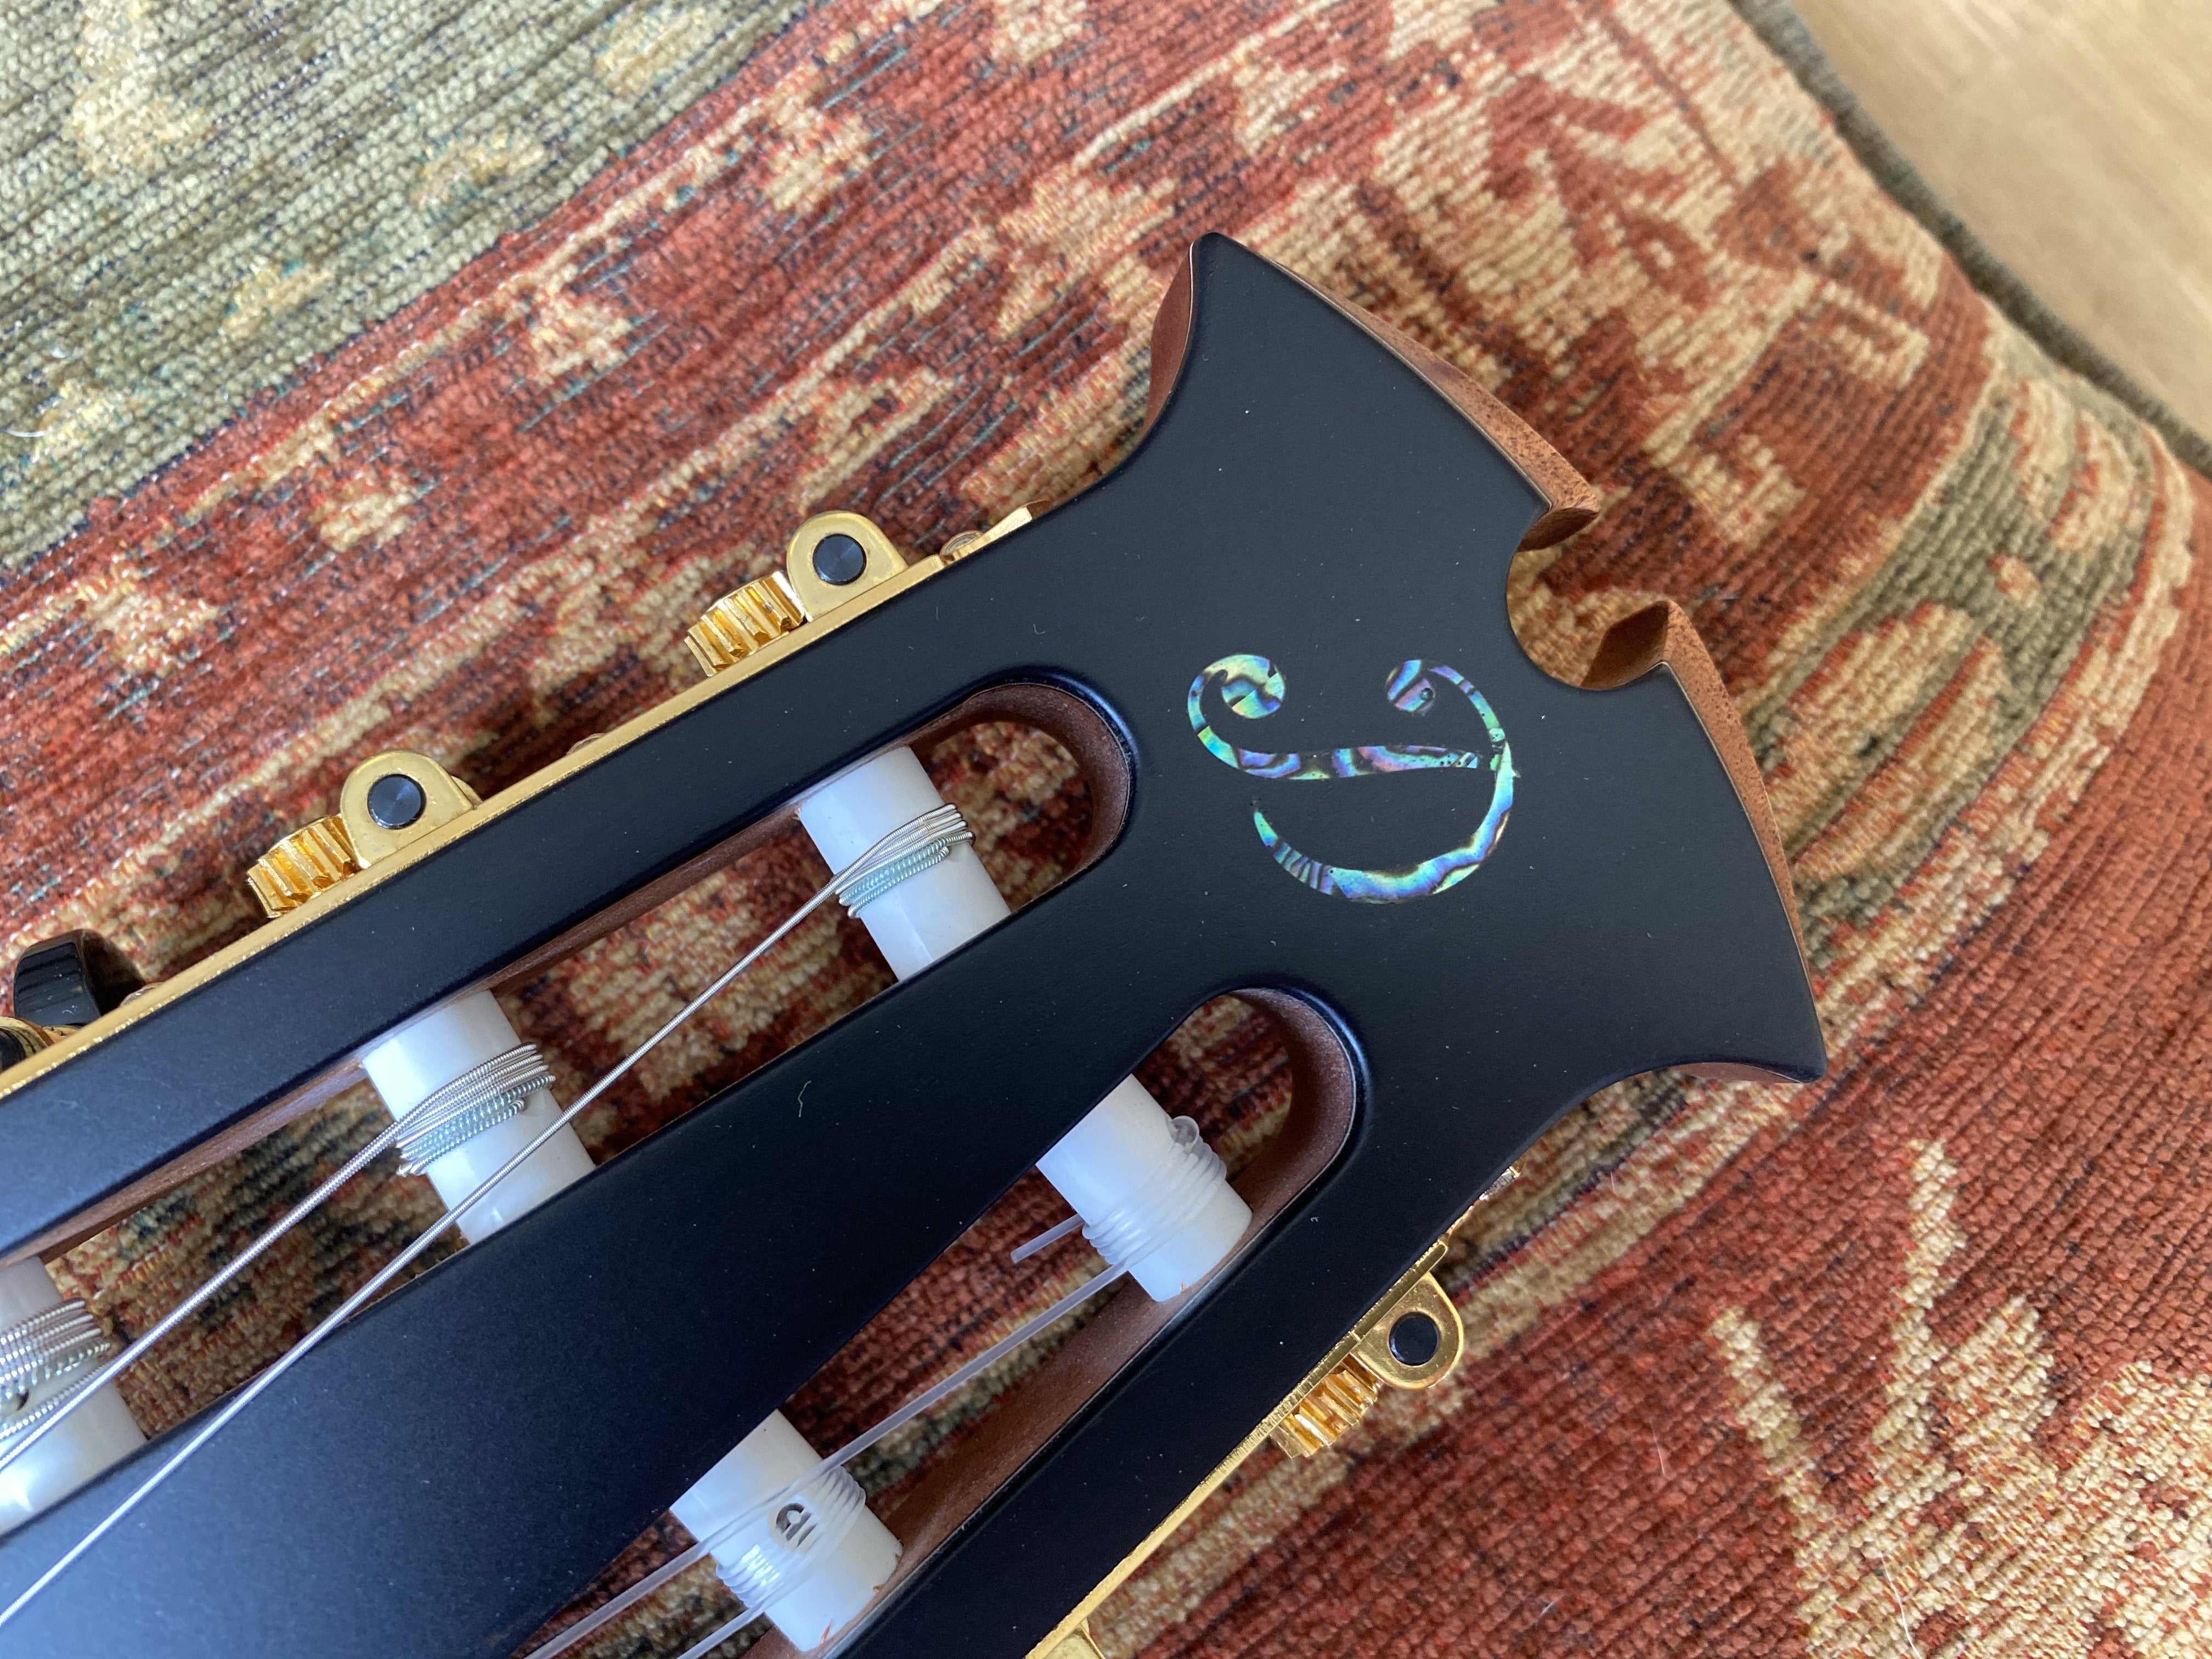 Dowina Master Built Strip Padauk HC, Acoustic Guitar for sale at Richards Guitars.